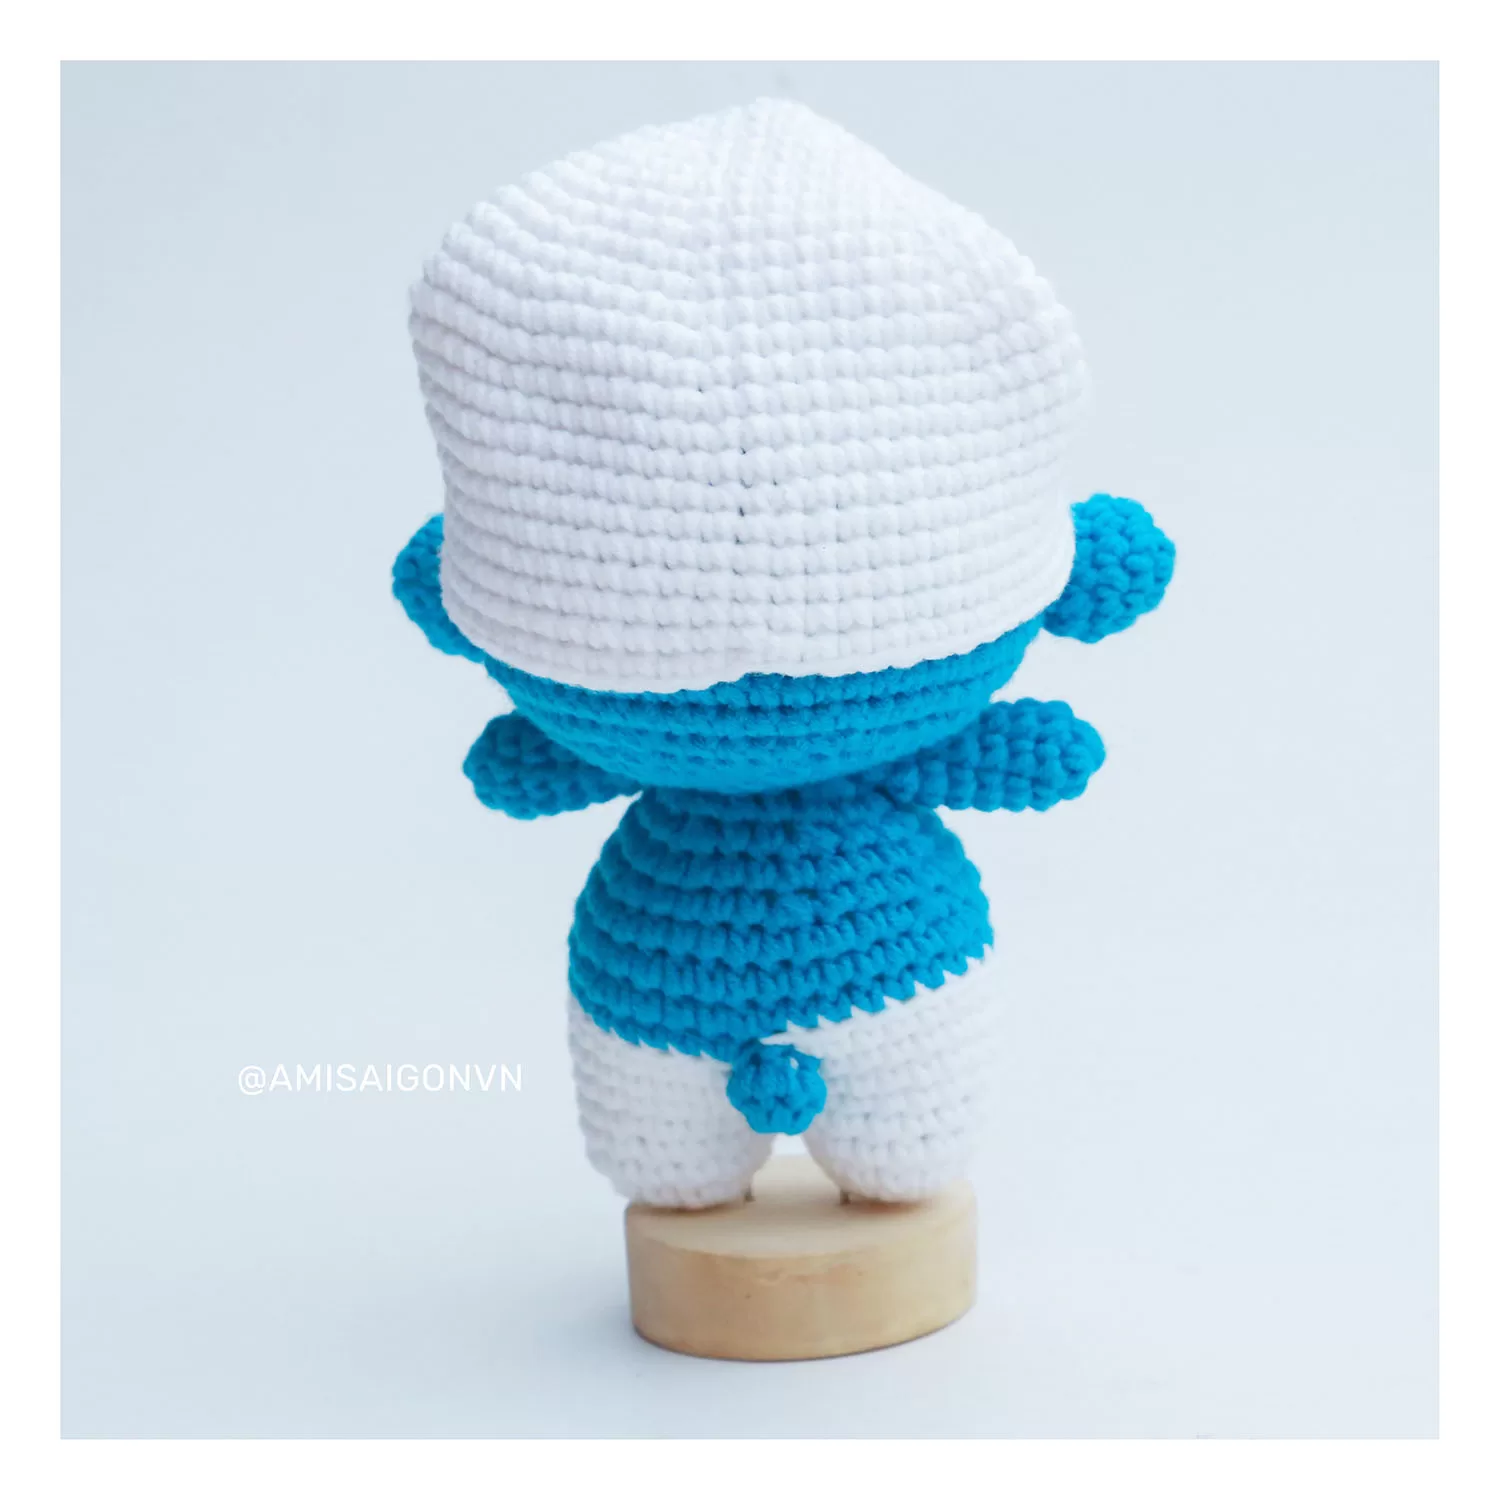 Jokey Smurfs Amigurumi | Crochet Pattern | Amigurumi Tutorial PDF in English | AmiSaigon